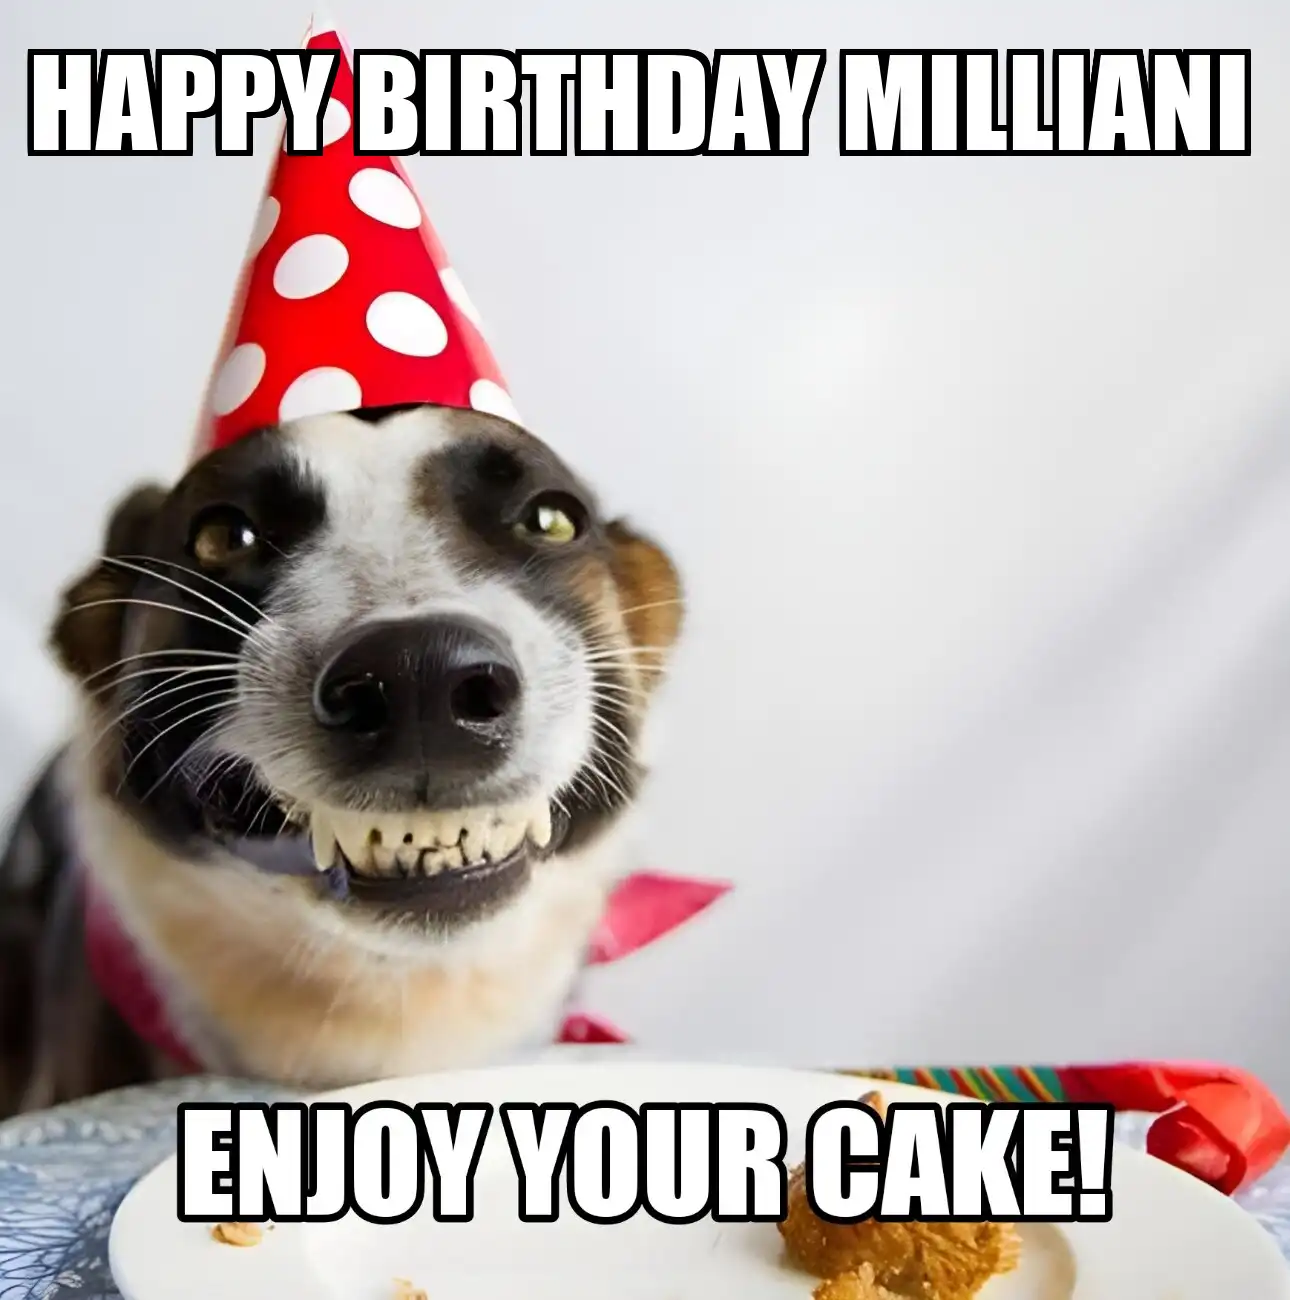 Happy Birthday Milliani Enjoy Your Cake Dog Meme